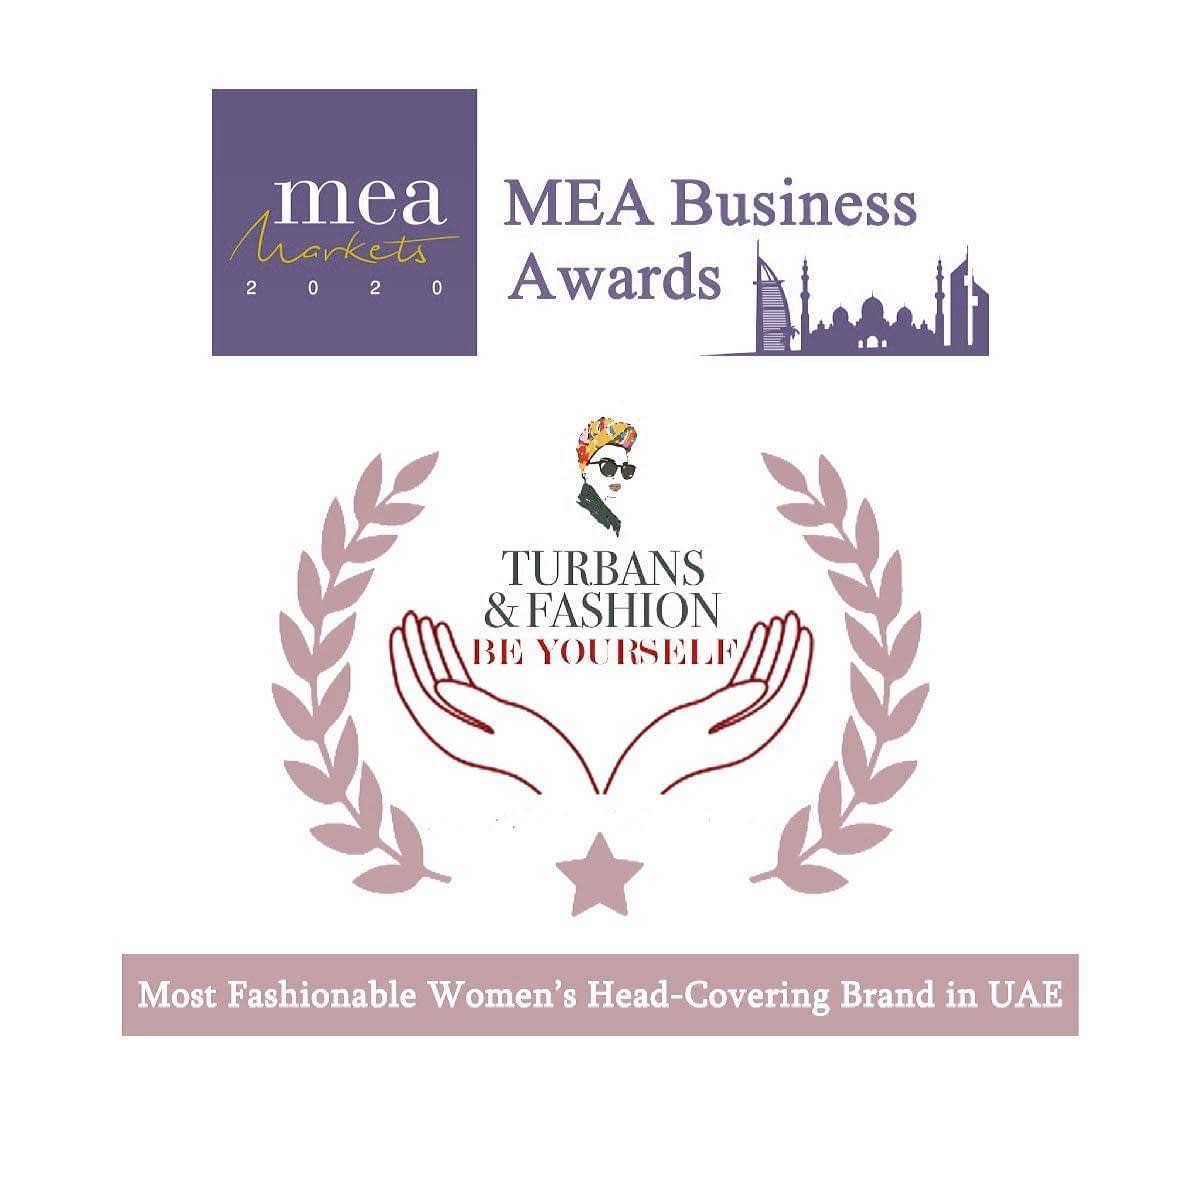 Women brand Turbans and Fashion won the MEA Business Award 2020